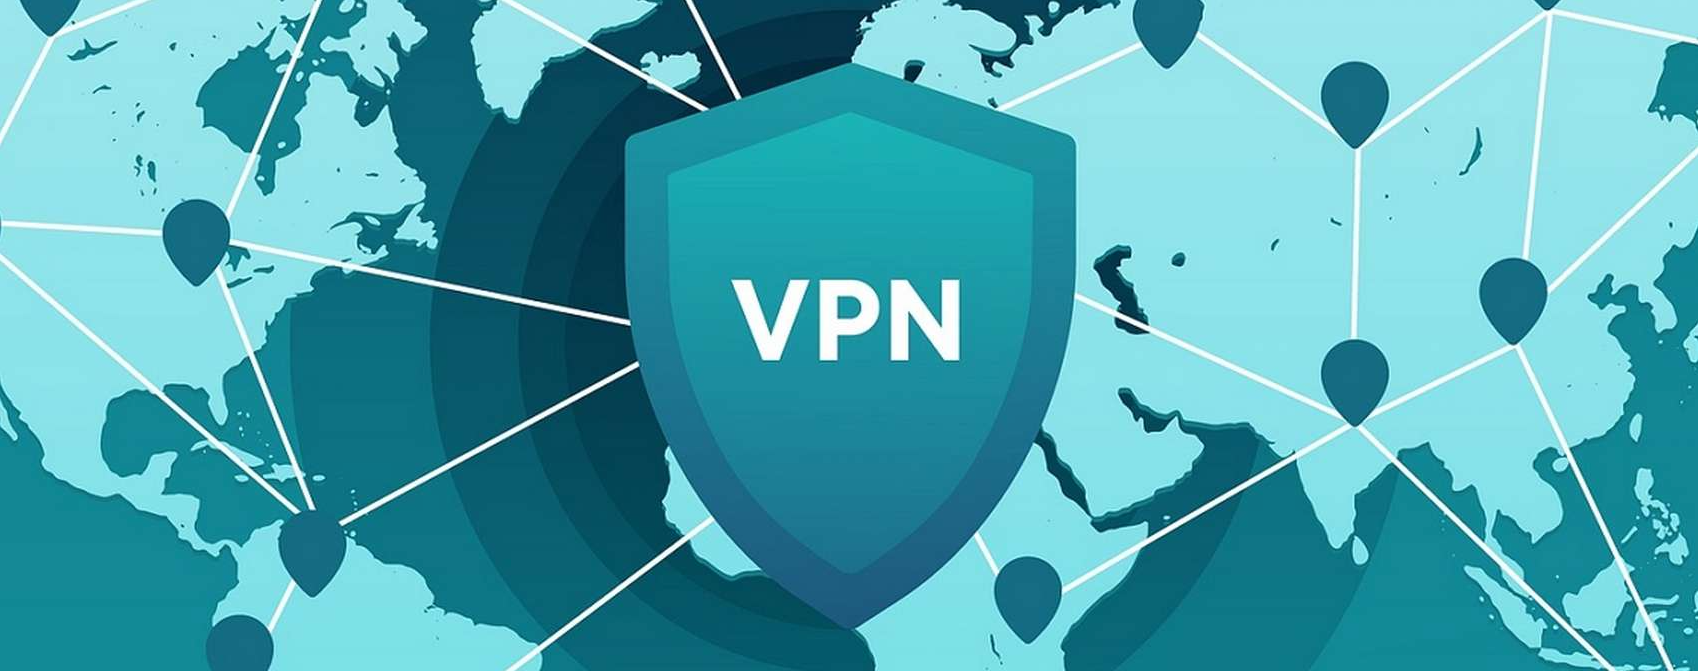 Build your own VPN server with OpenVPN | by Adonis Gaitatzis | Medium